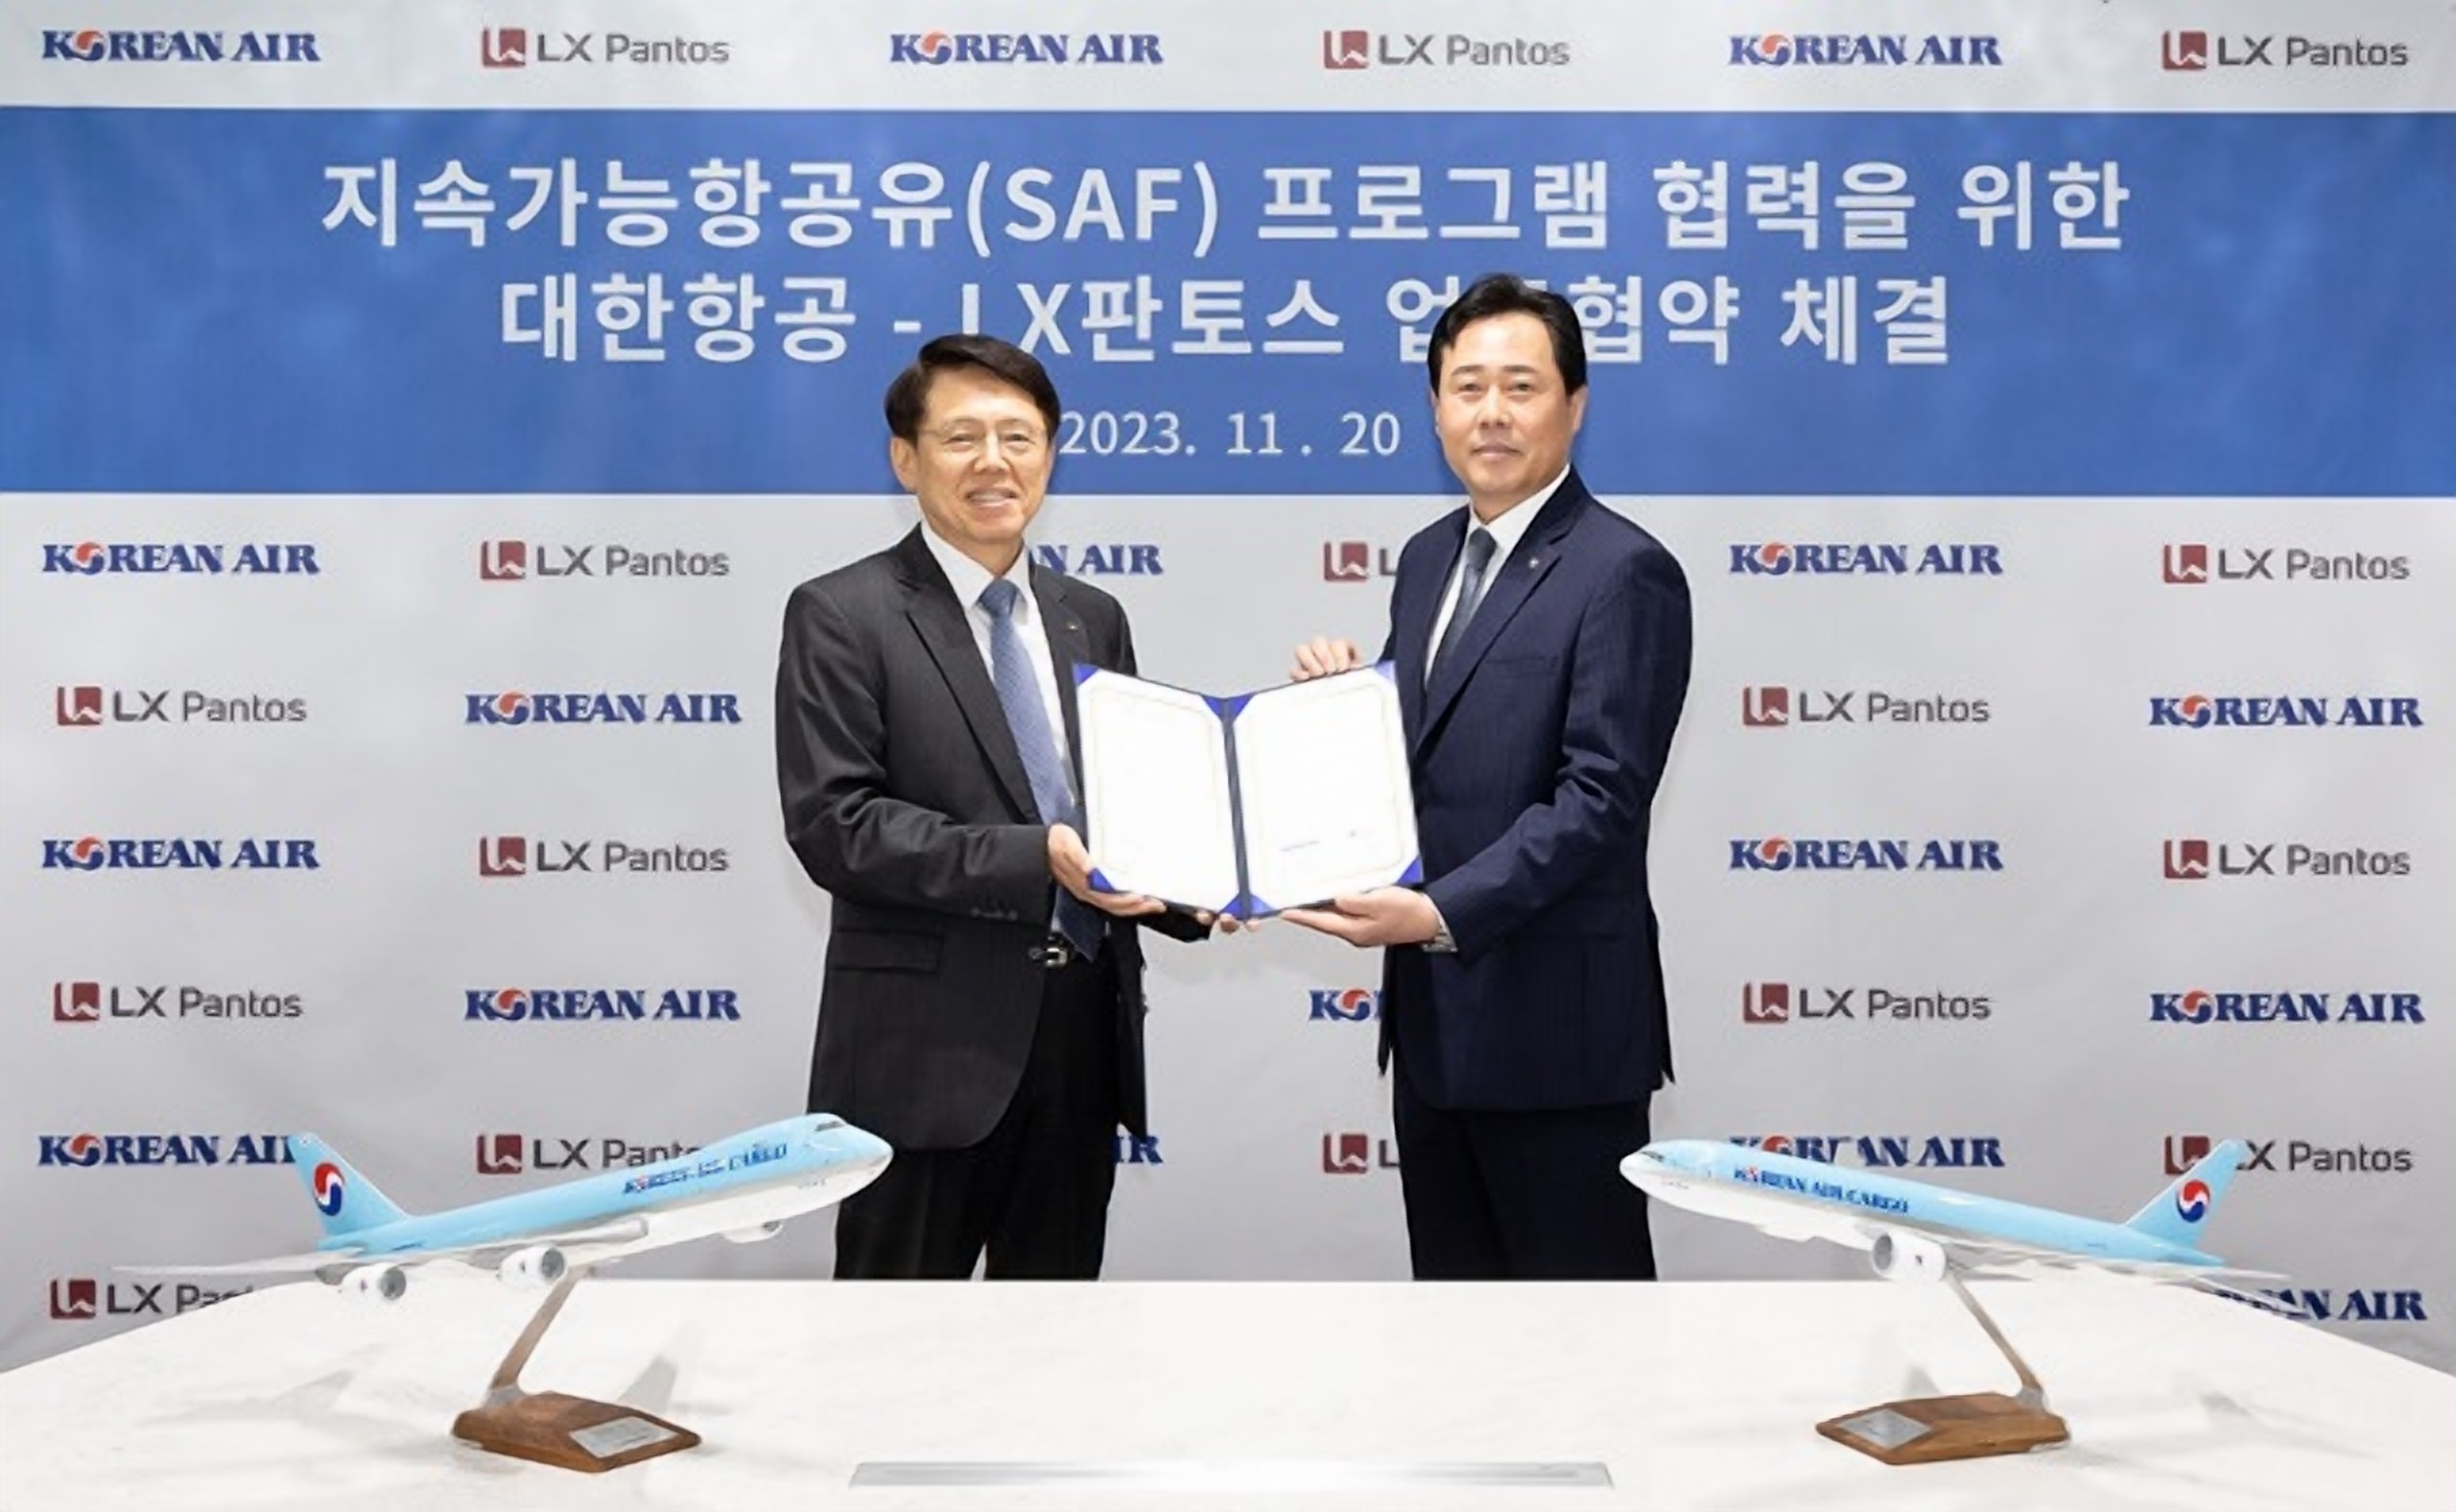 KnowESG_Korean Air and LX Pantos Boost Cargo SAF Use